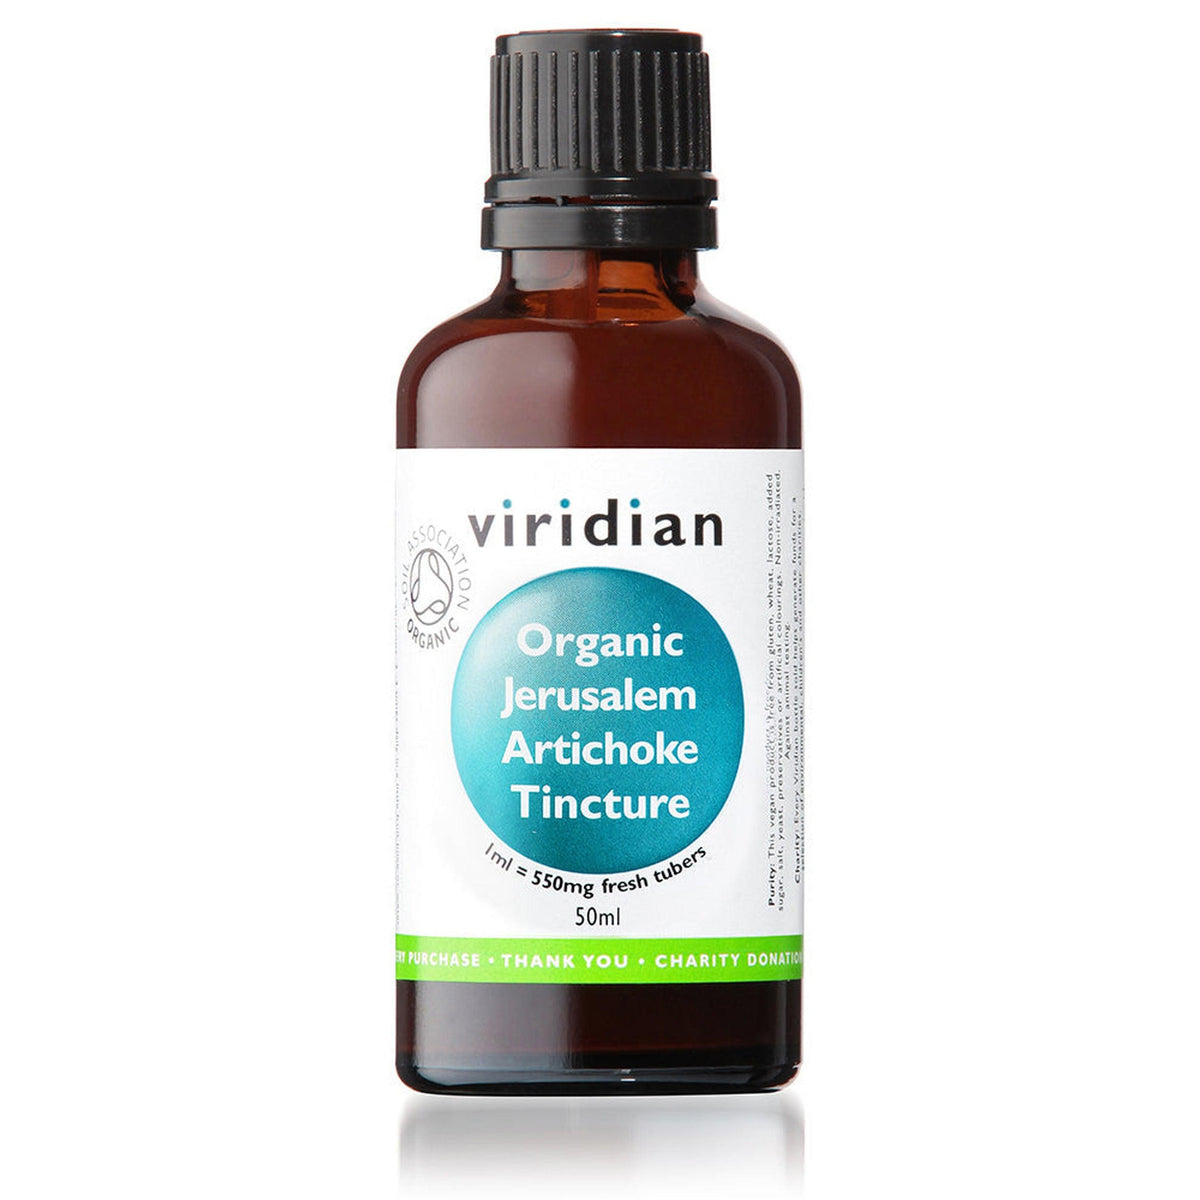 Viridian Organic Jerusalem Artichoke Tincture 50ml- Lillys Pharmacy and Health Store